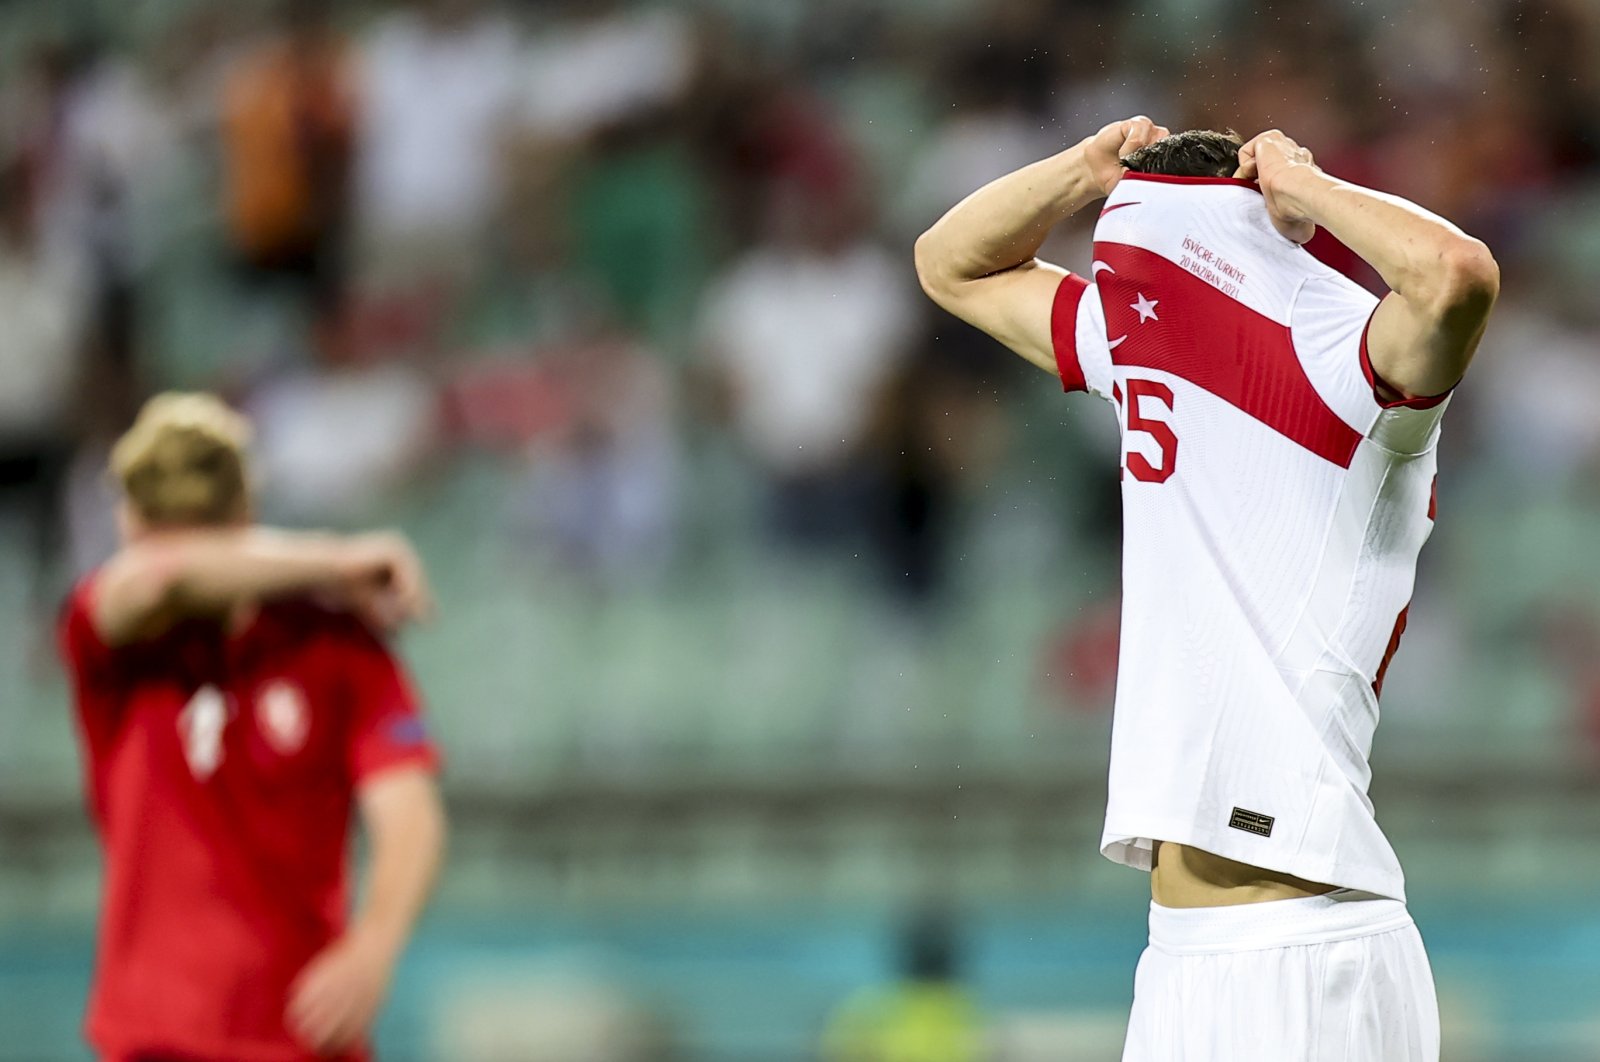 Turkish defender Mert Müldür reacts after missing to score during the UEFA Euro 2020 Group A match against Switzerland, Baku, Azerbaijan, June 20, 2021. (AA Photo)